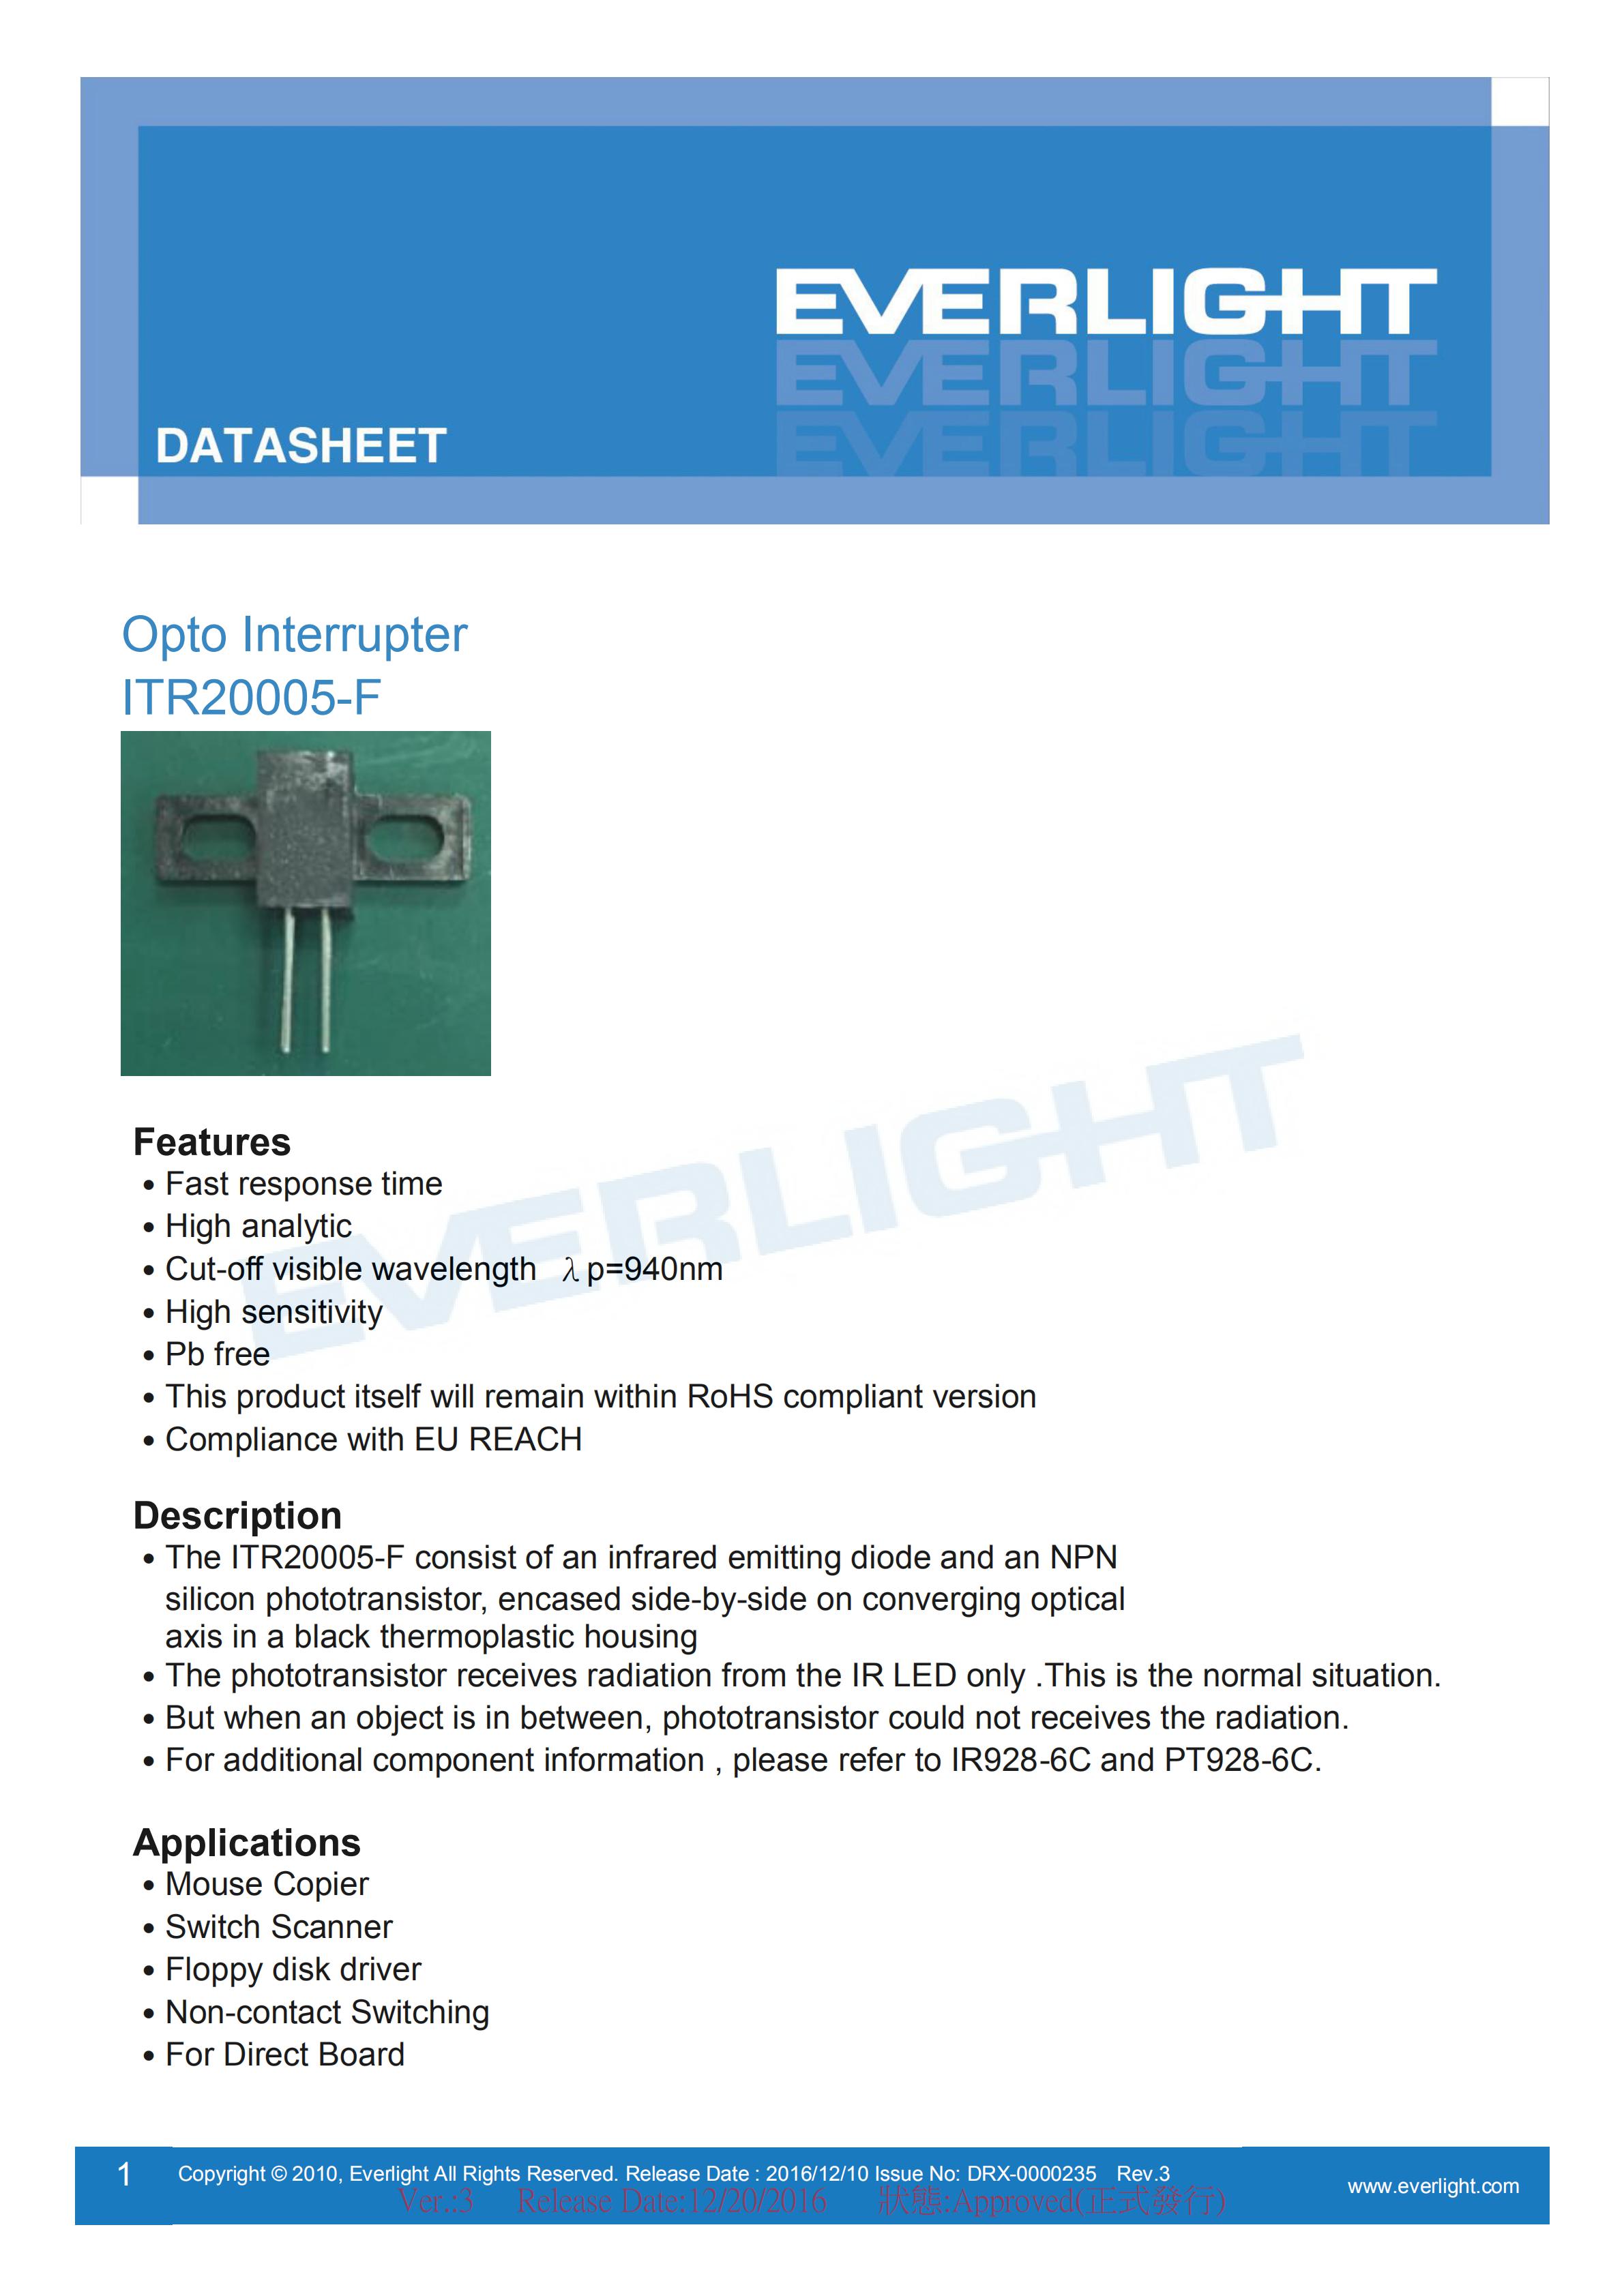 EVERLIGHT Optical Switch ITR20005-F Opto Interrupter Datasheet